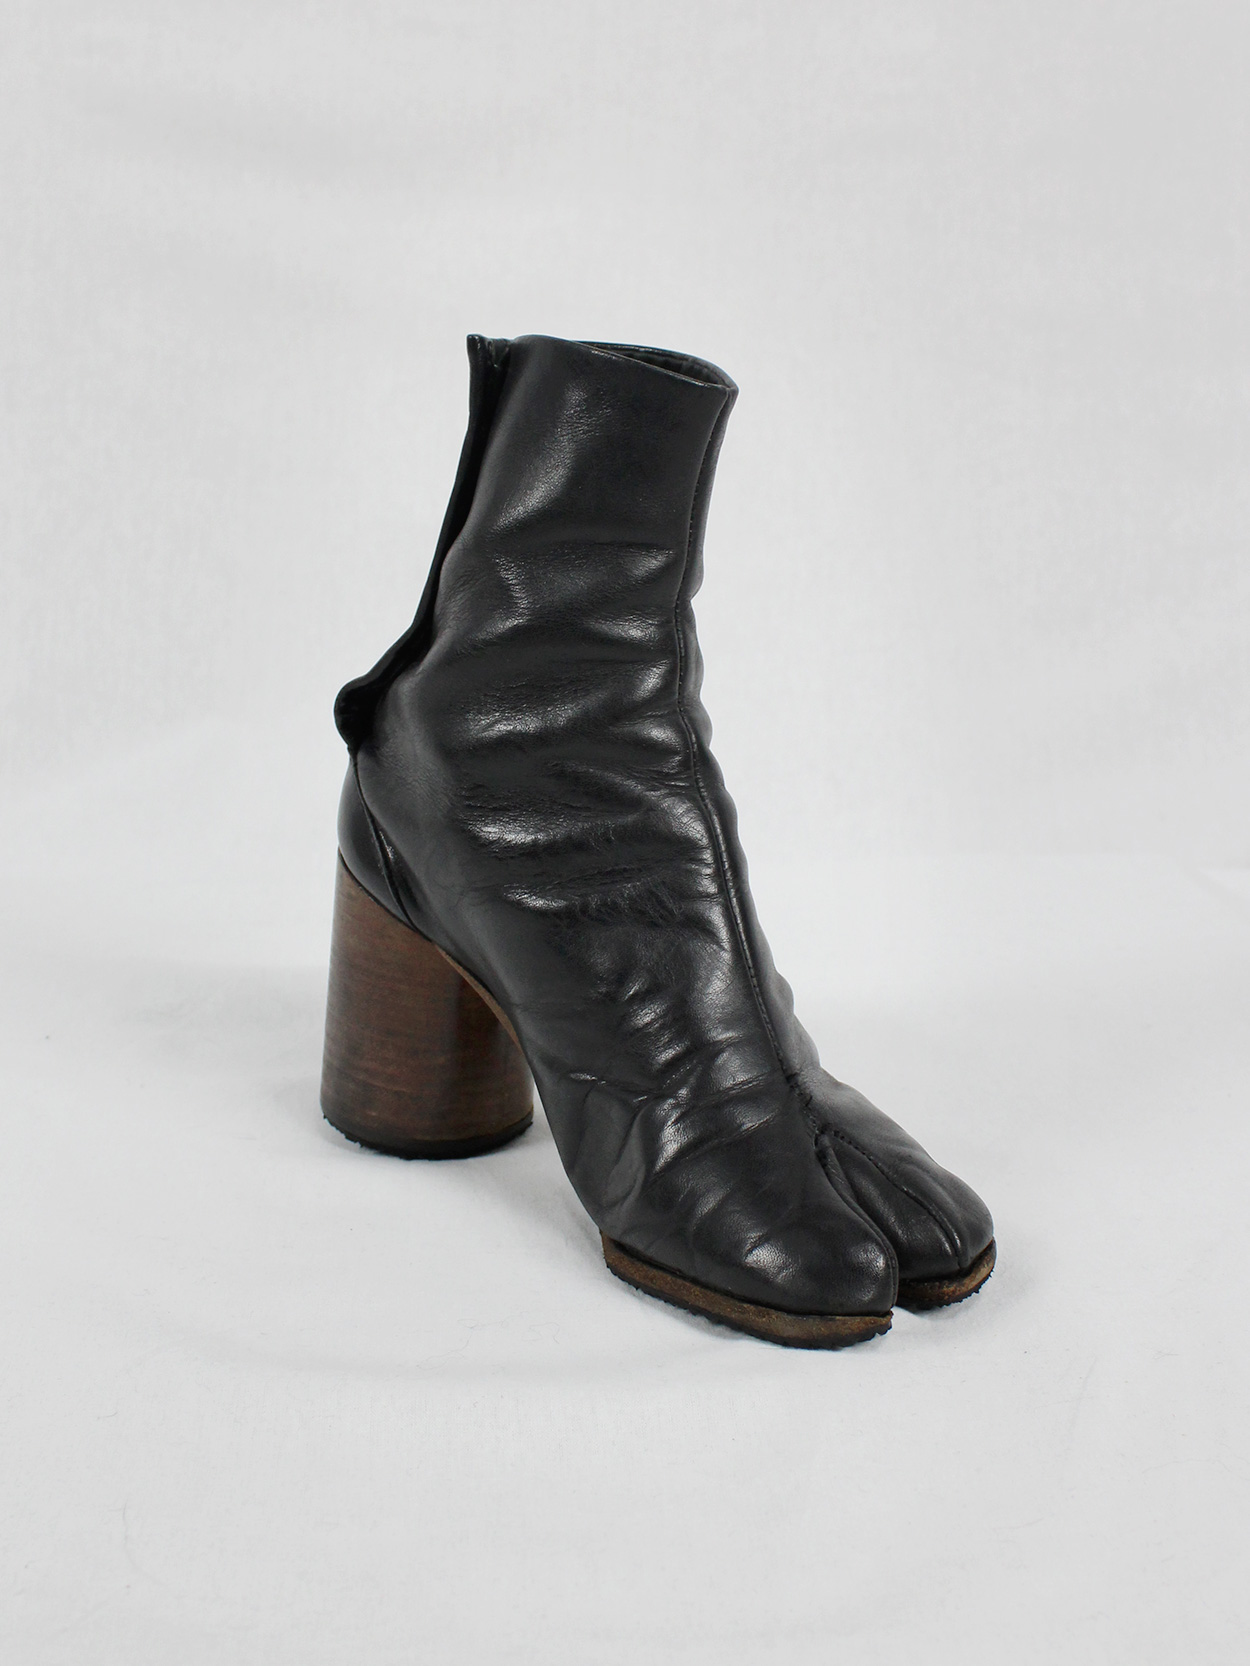 vaniitas vintage Maison Martin Margiela black tabi boots with round wooden heel 2001 4622